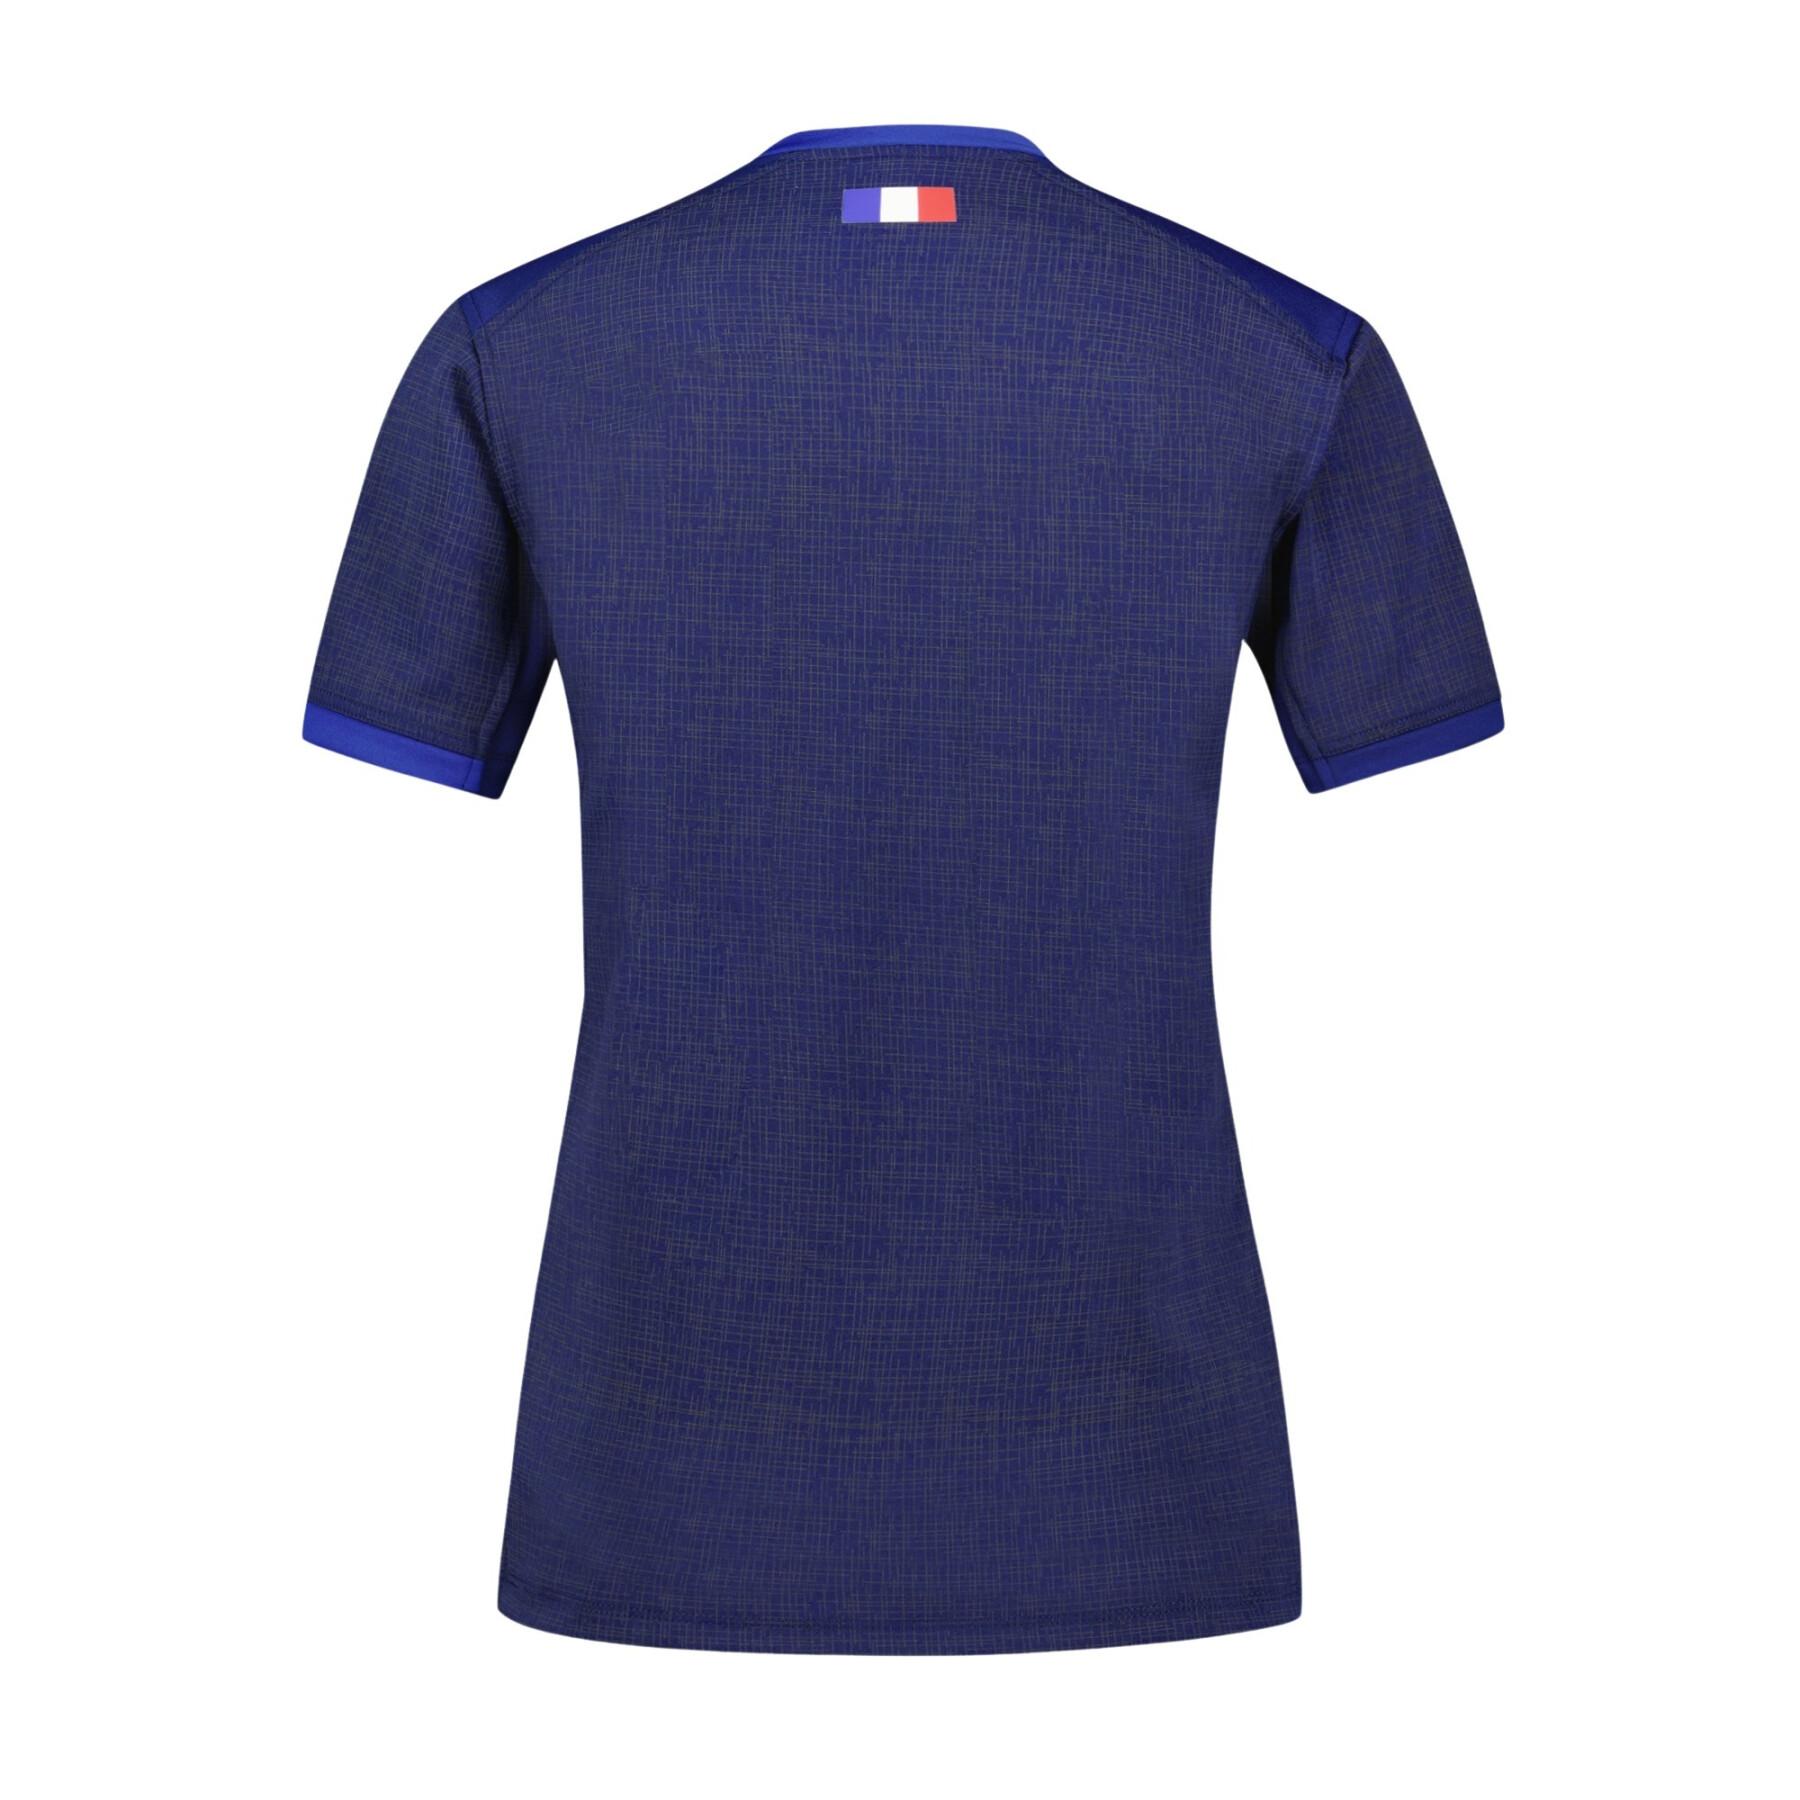 Camiseta Replica Femme XV de France - Coupe du Monde de Rugby 2023